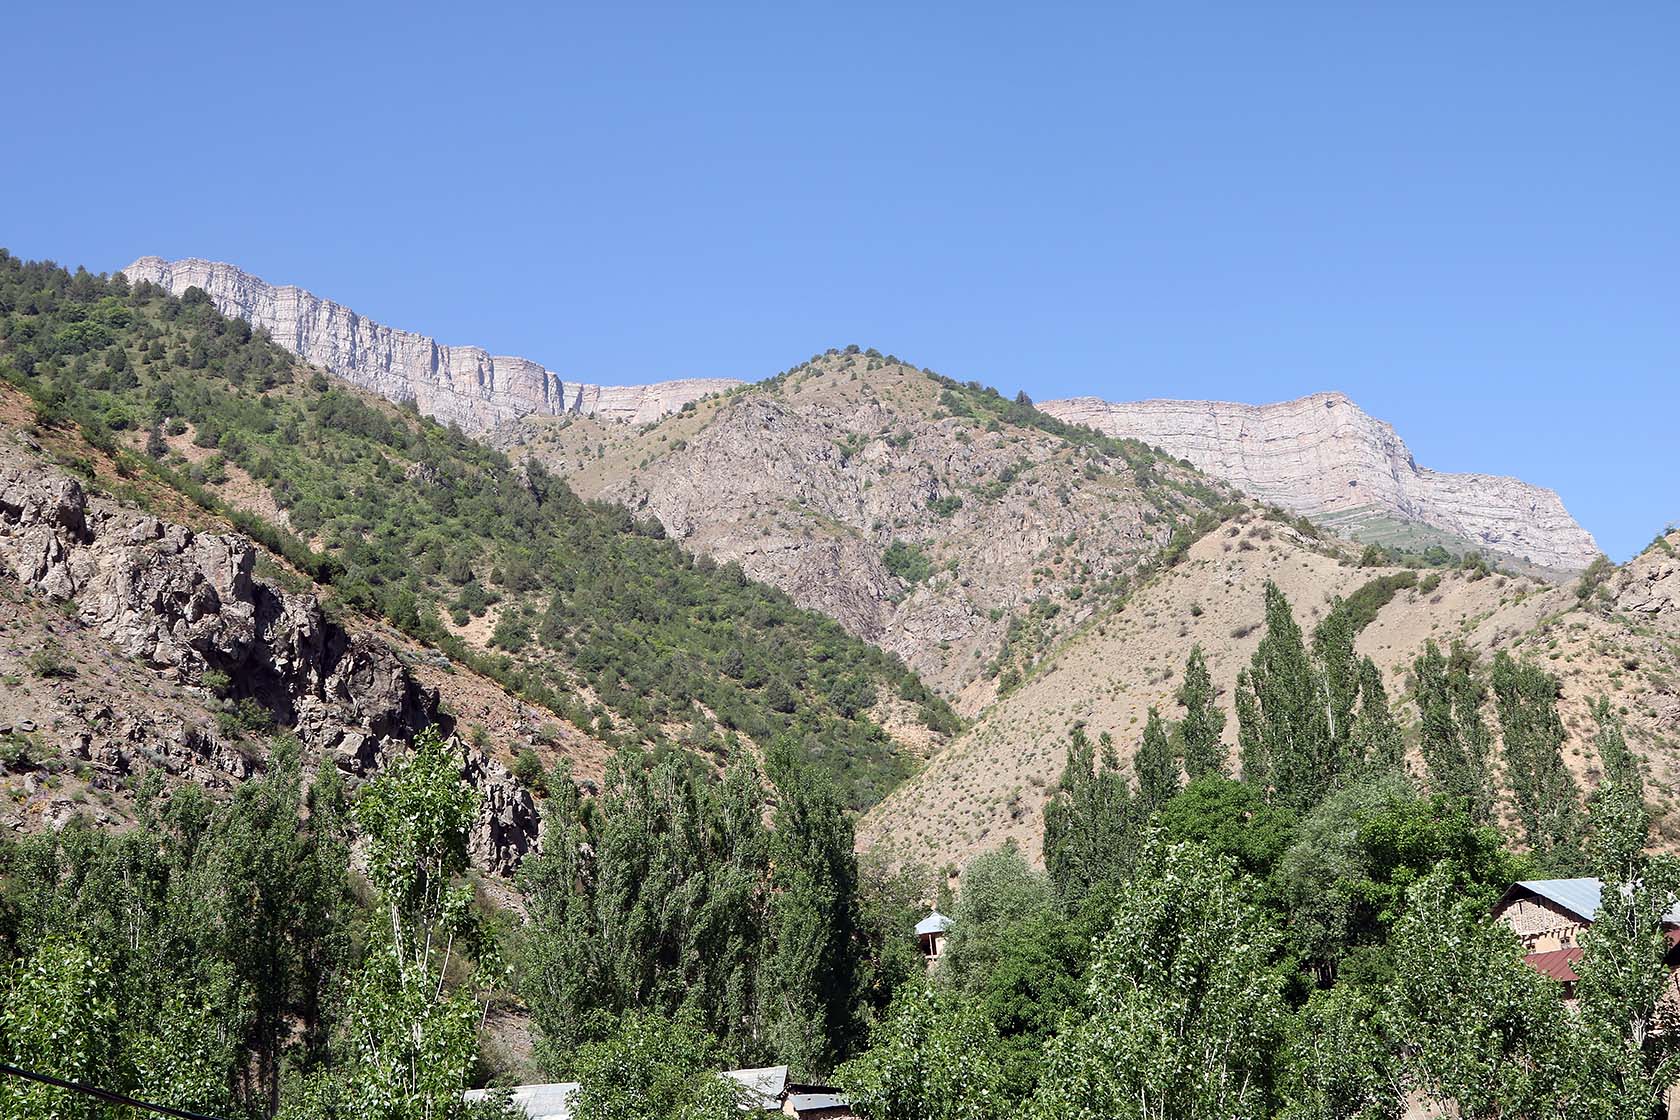 Окрестности кишлака Бахча, изображение ландшафта.